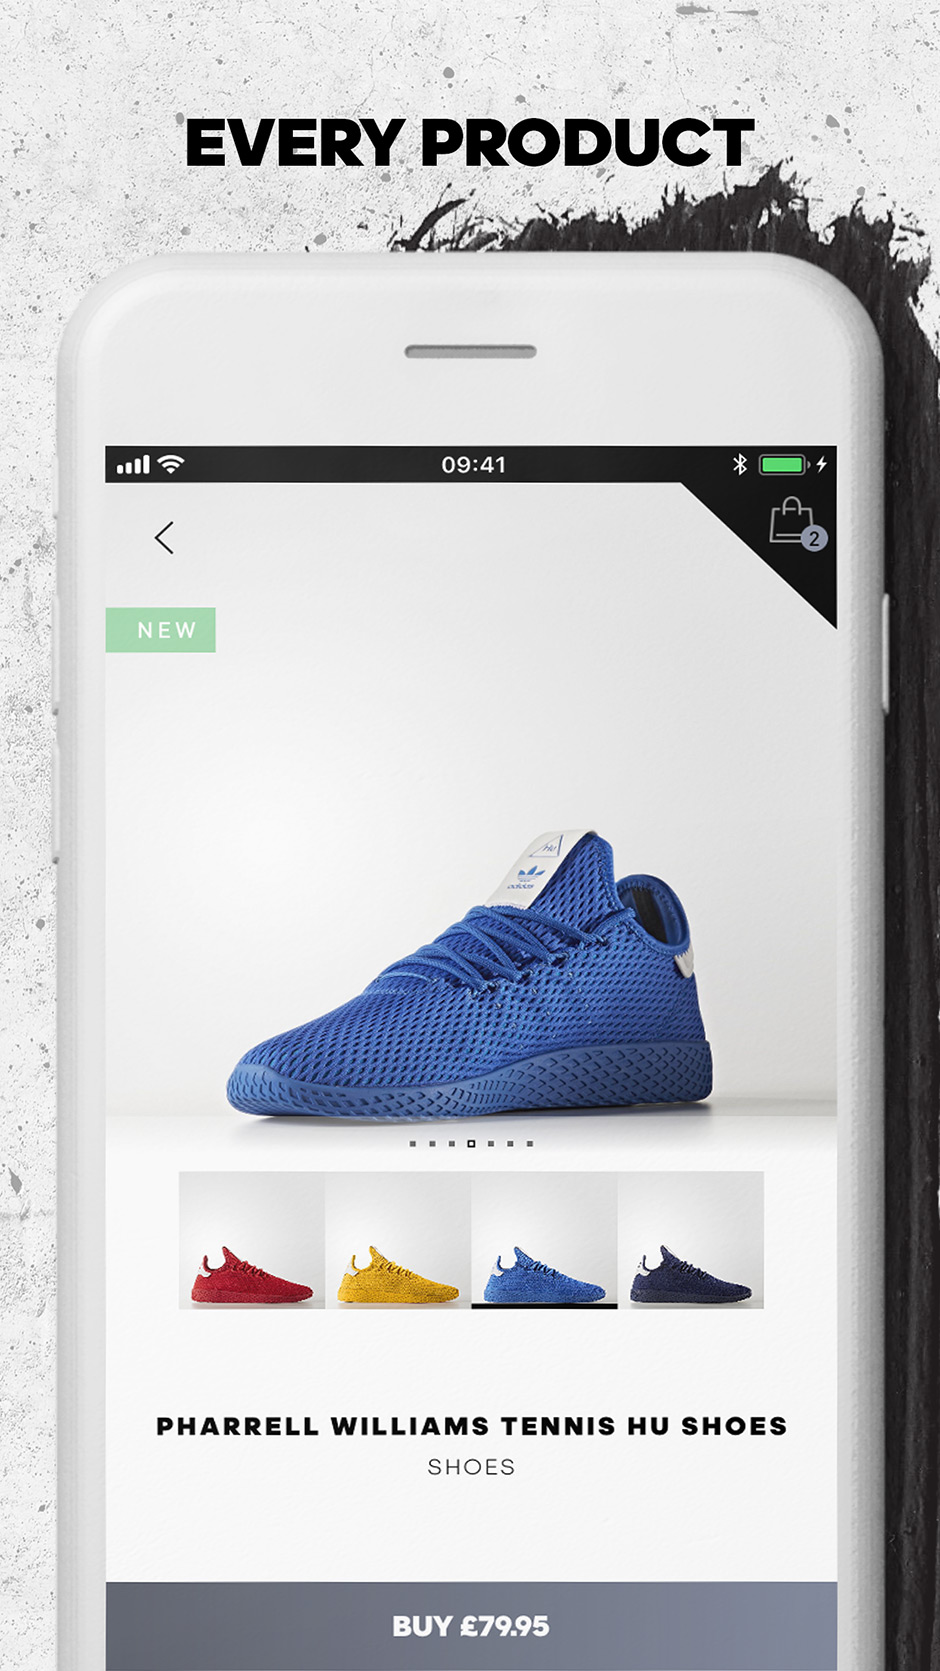 adidas online app